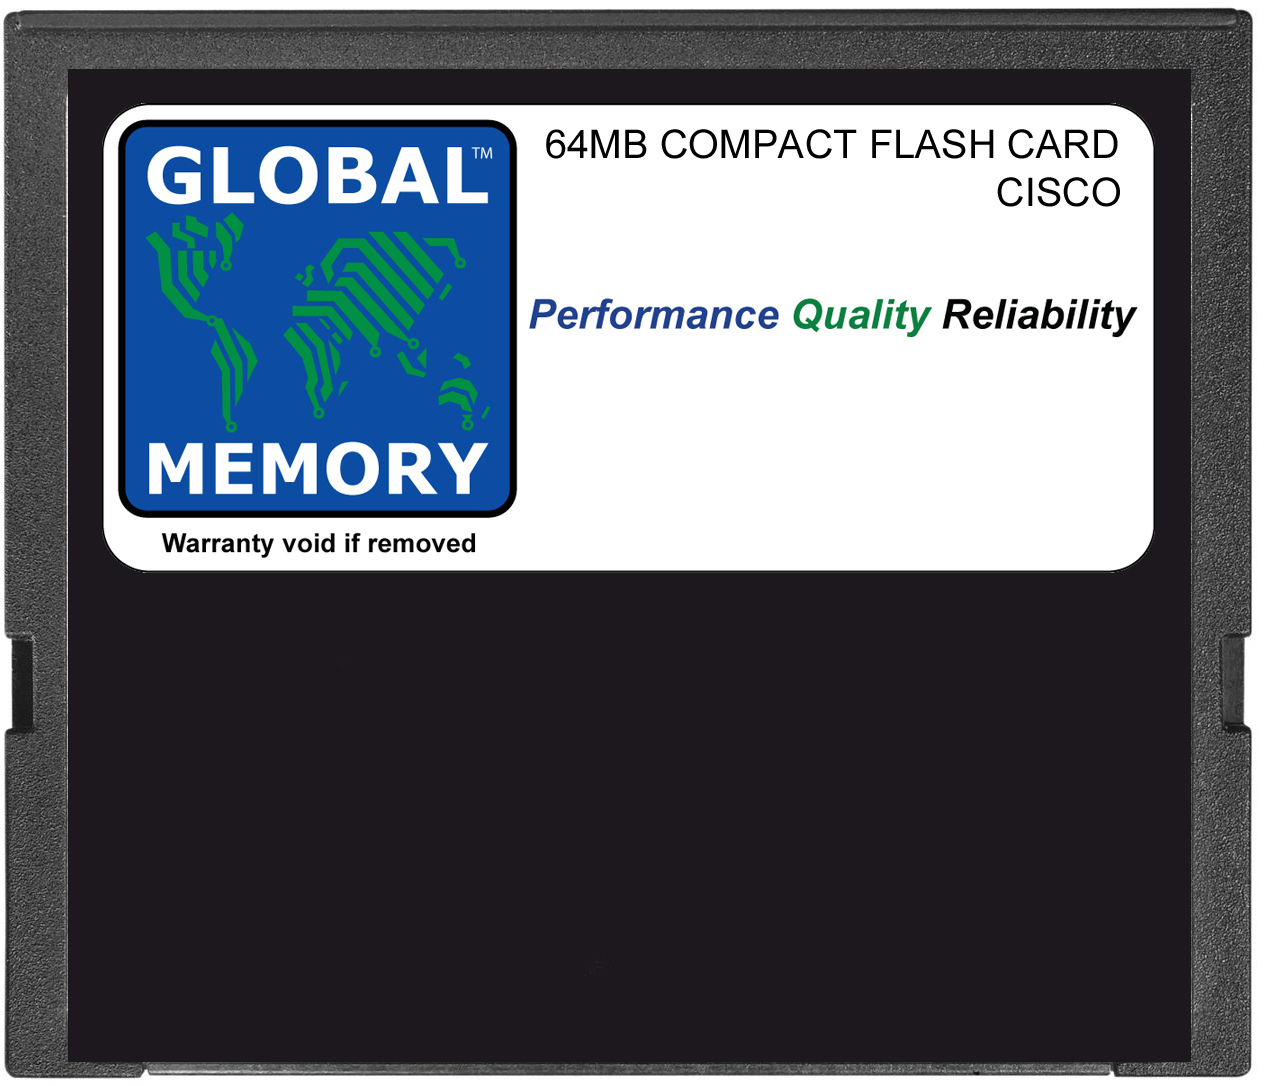 64MB COMPACT FLASH CARD MEMORY FOR CISCO 7400 ASR / 7400 VPN ROUTERS (MEM-COMP-FLD64M)